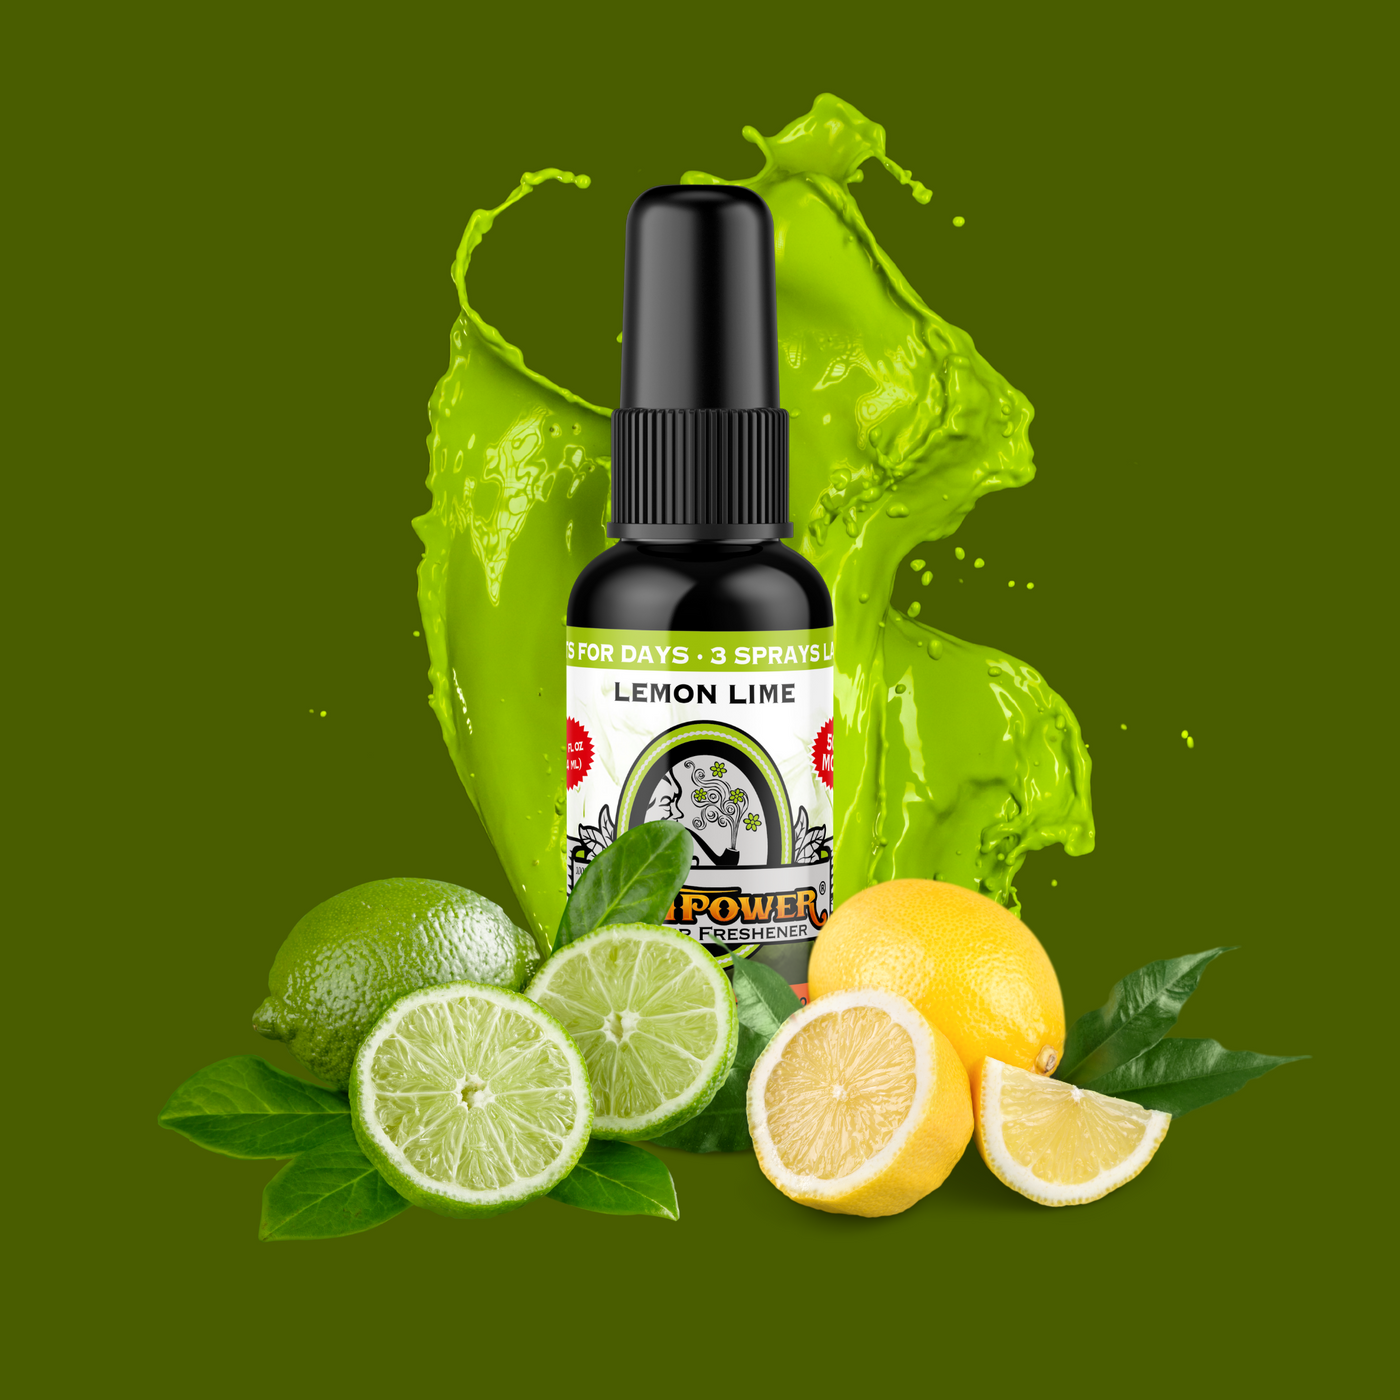 Lemon Lime Air Freshener Spray